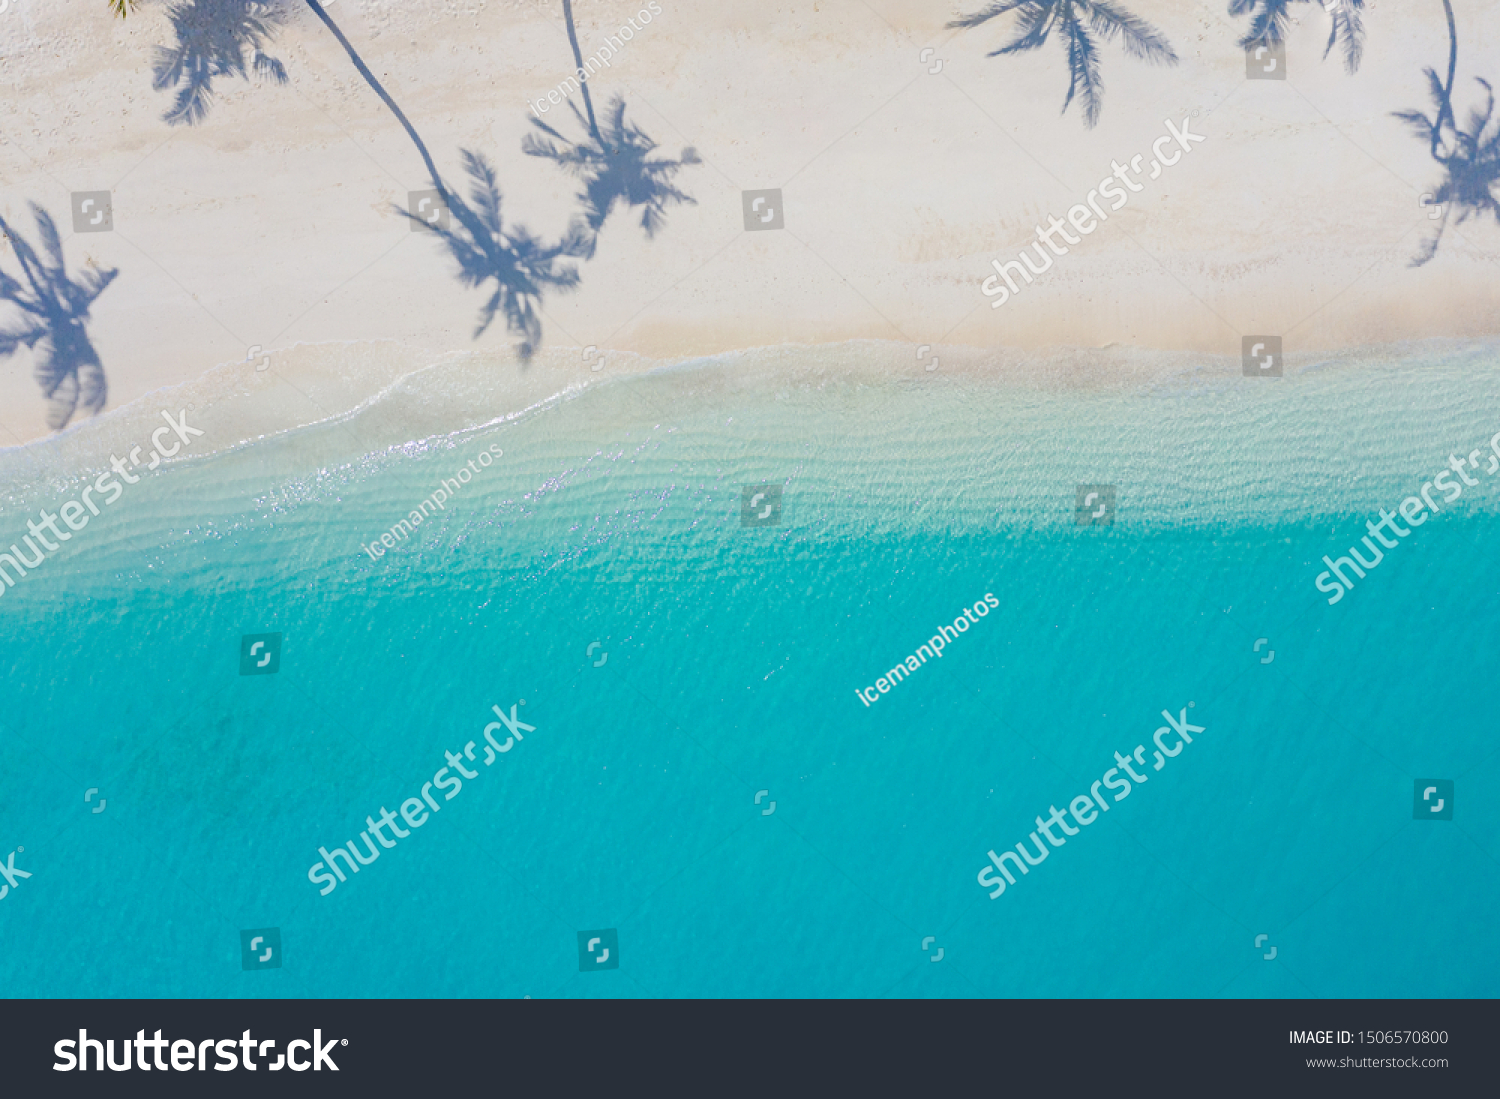 Aerial Beach Landscape Minimalist Beach View Stock Photo Edit Now 1506570800